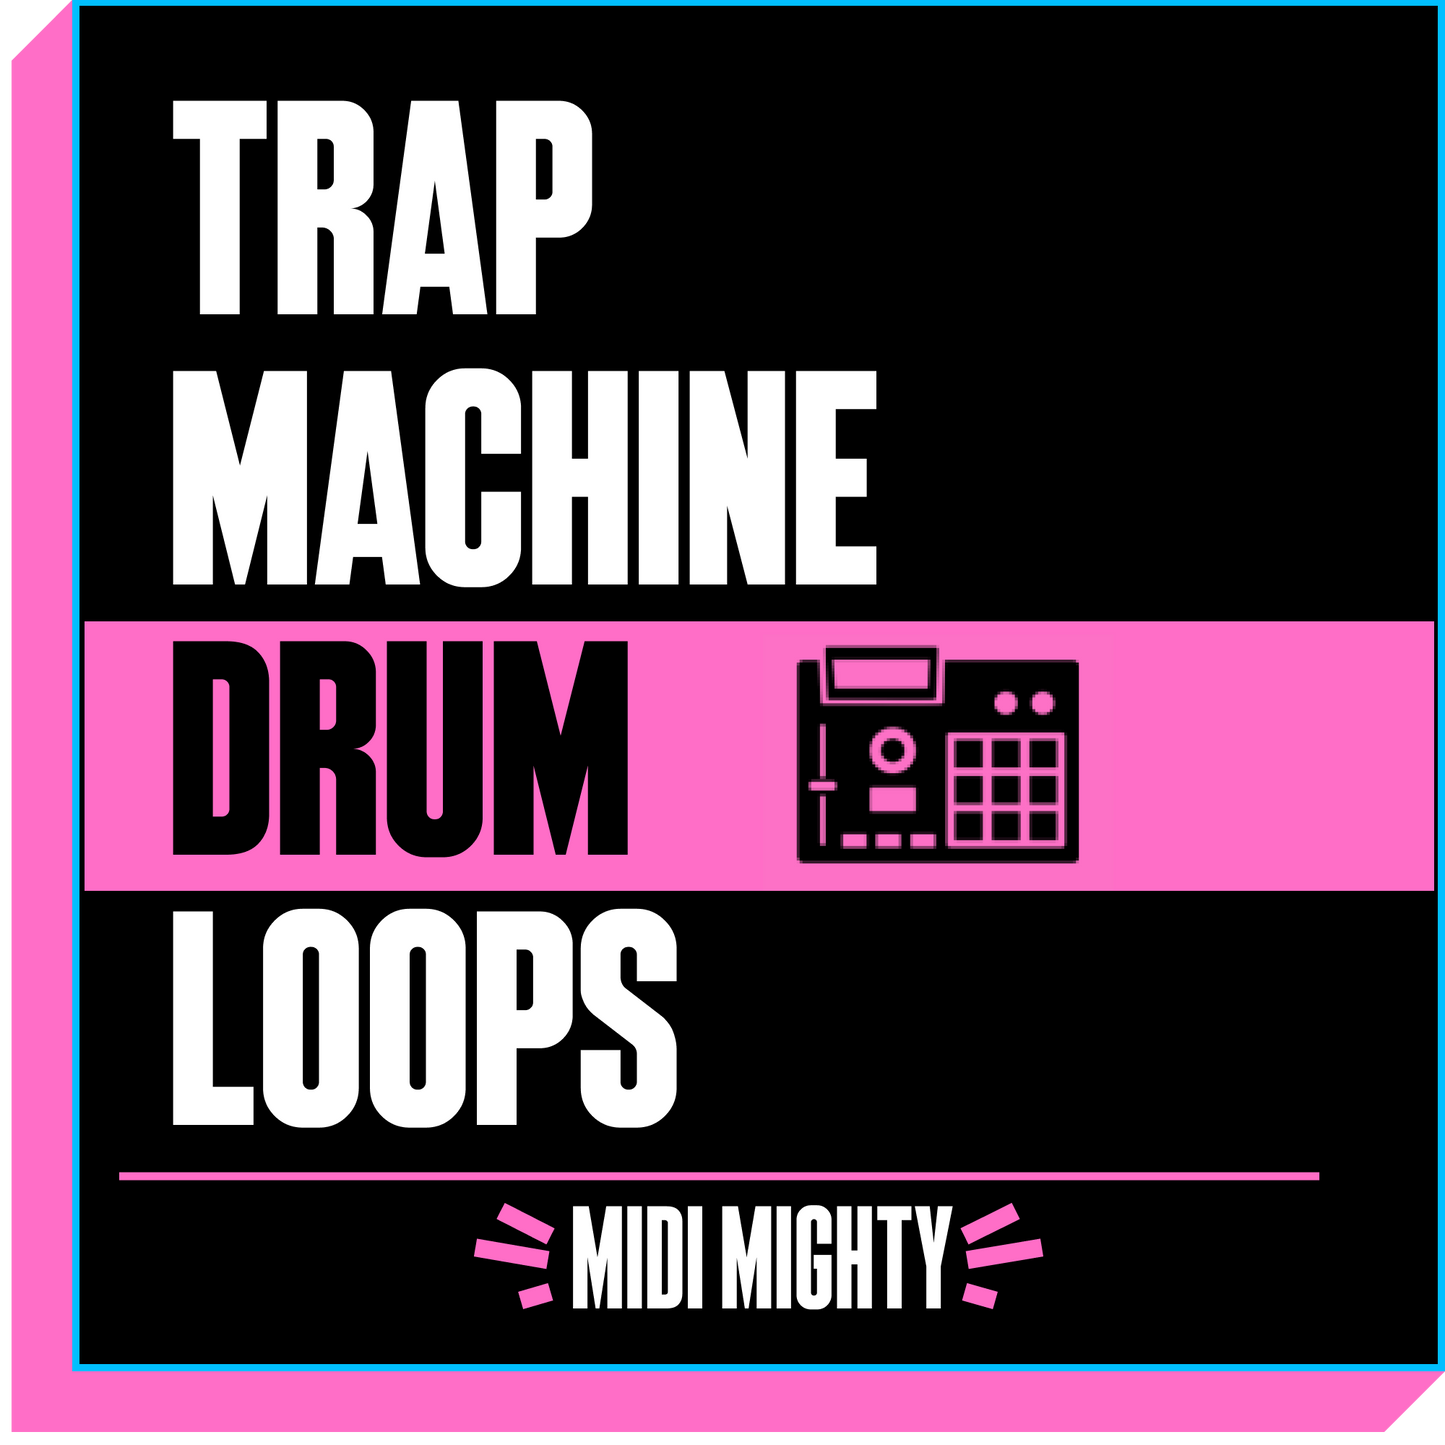 Trap Machine Drum Loops - MIDI MIGHTY